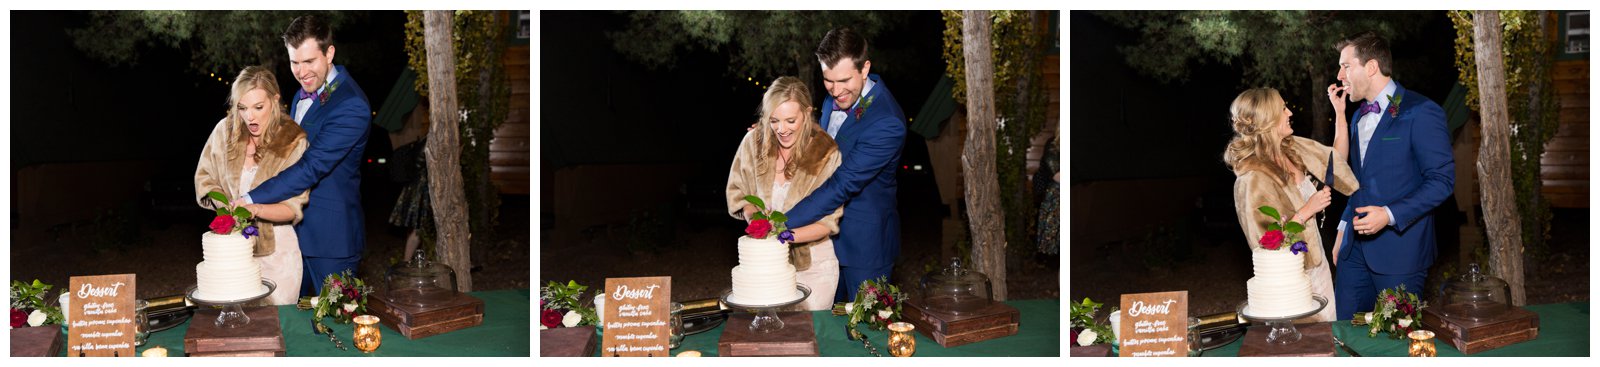 cutting the cake wedding photos